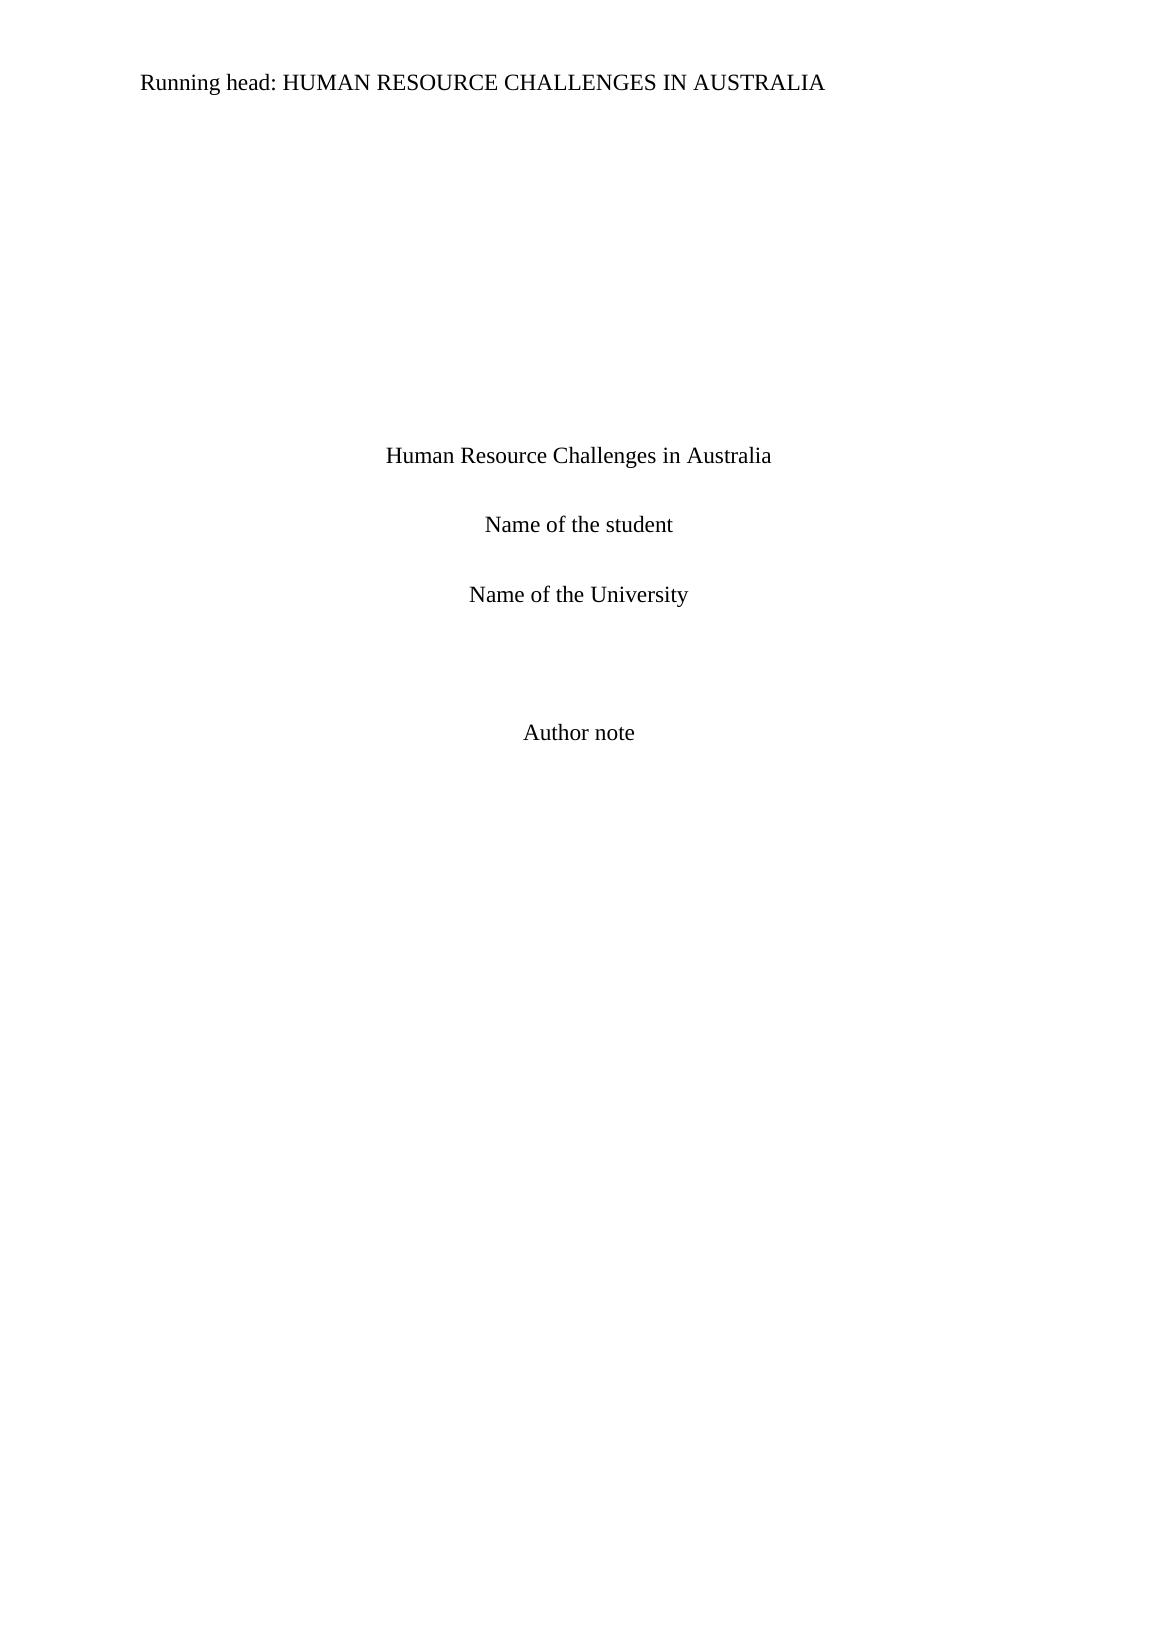 Human Resource Challenges in Australia_1